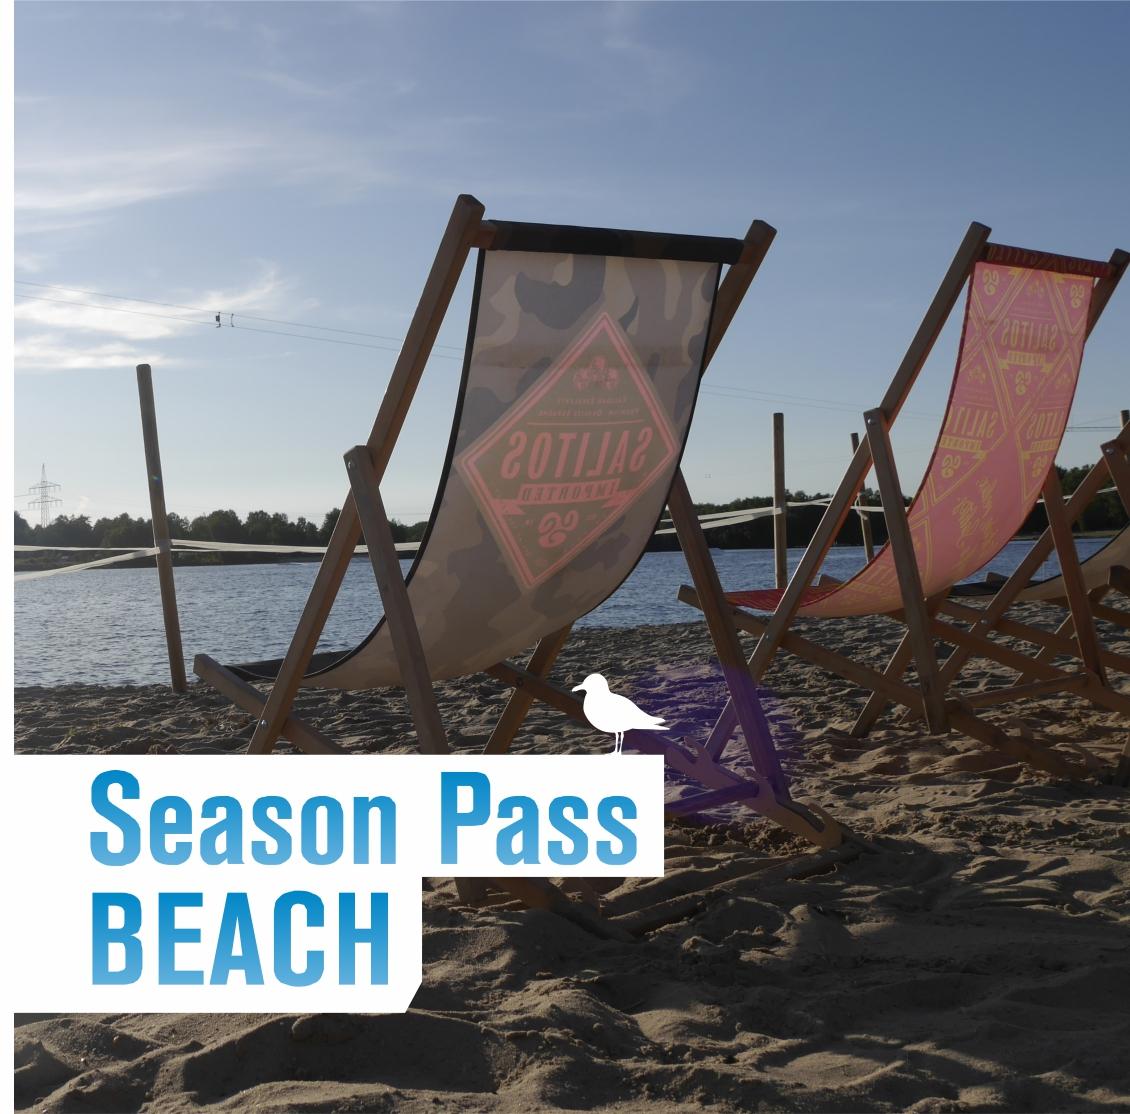 Season Pass Beach